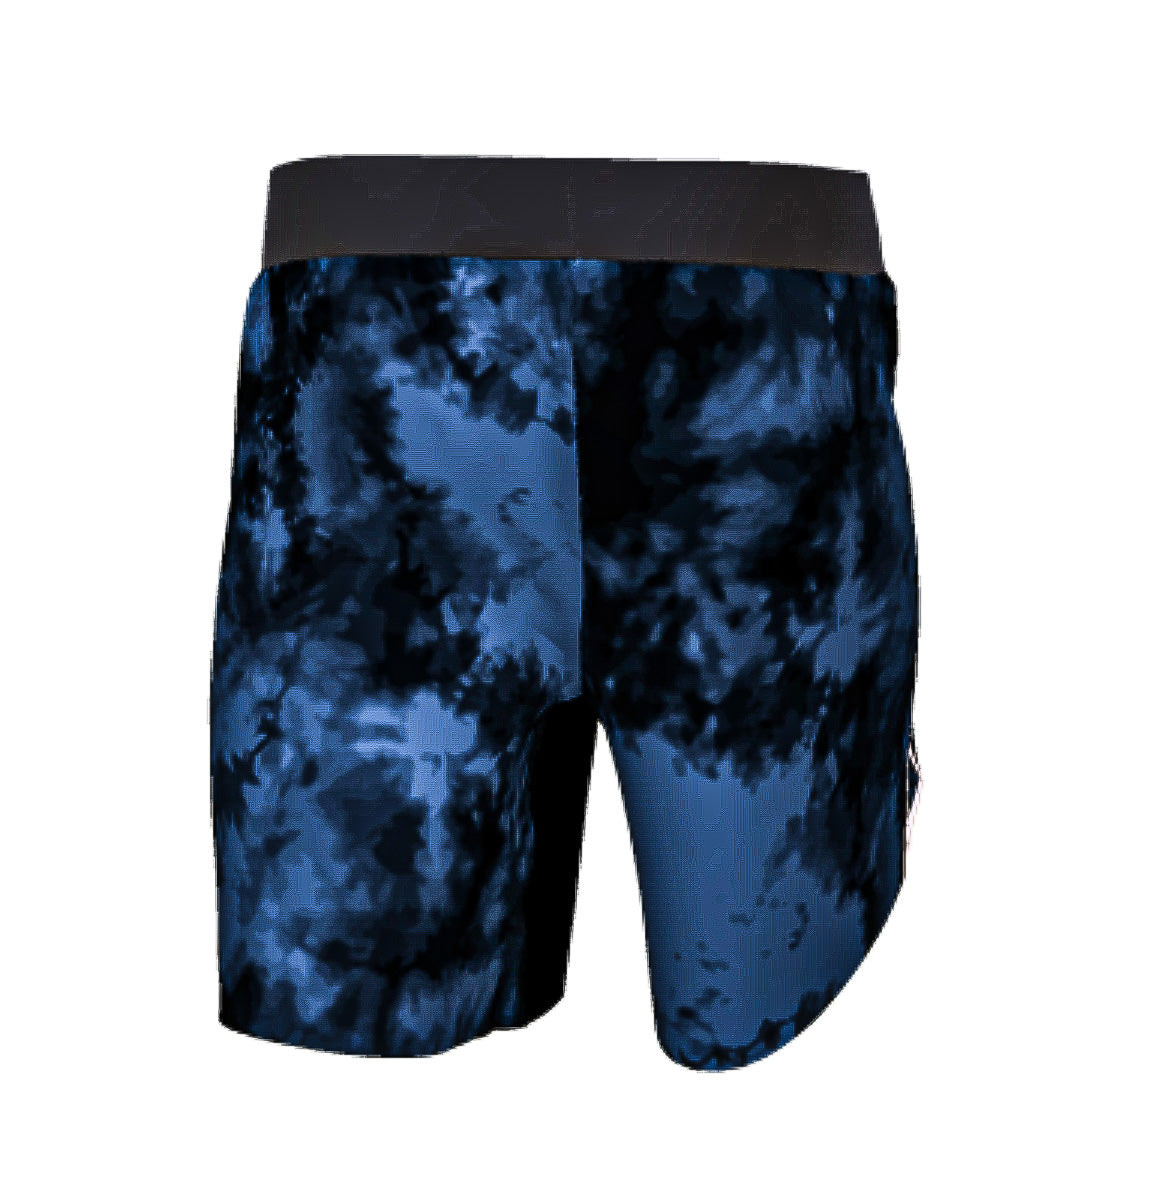 “Blue Tie Dye” Moti Horenstein Shorts